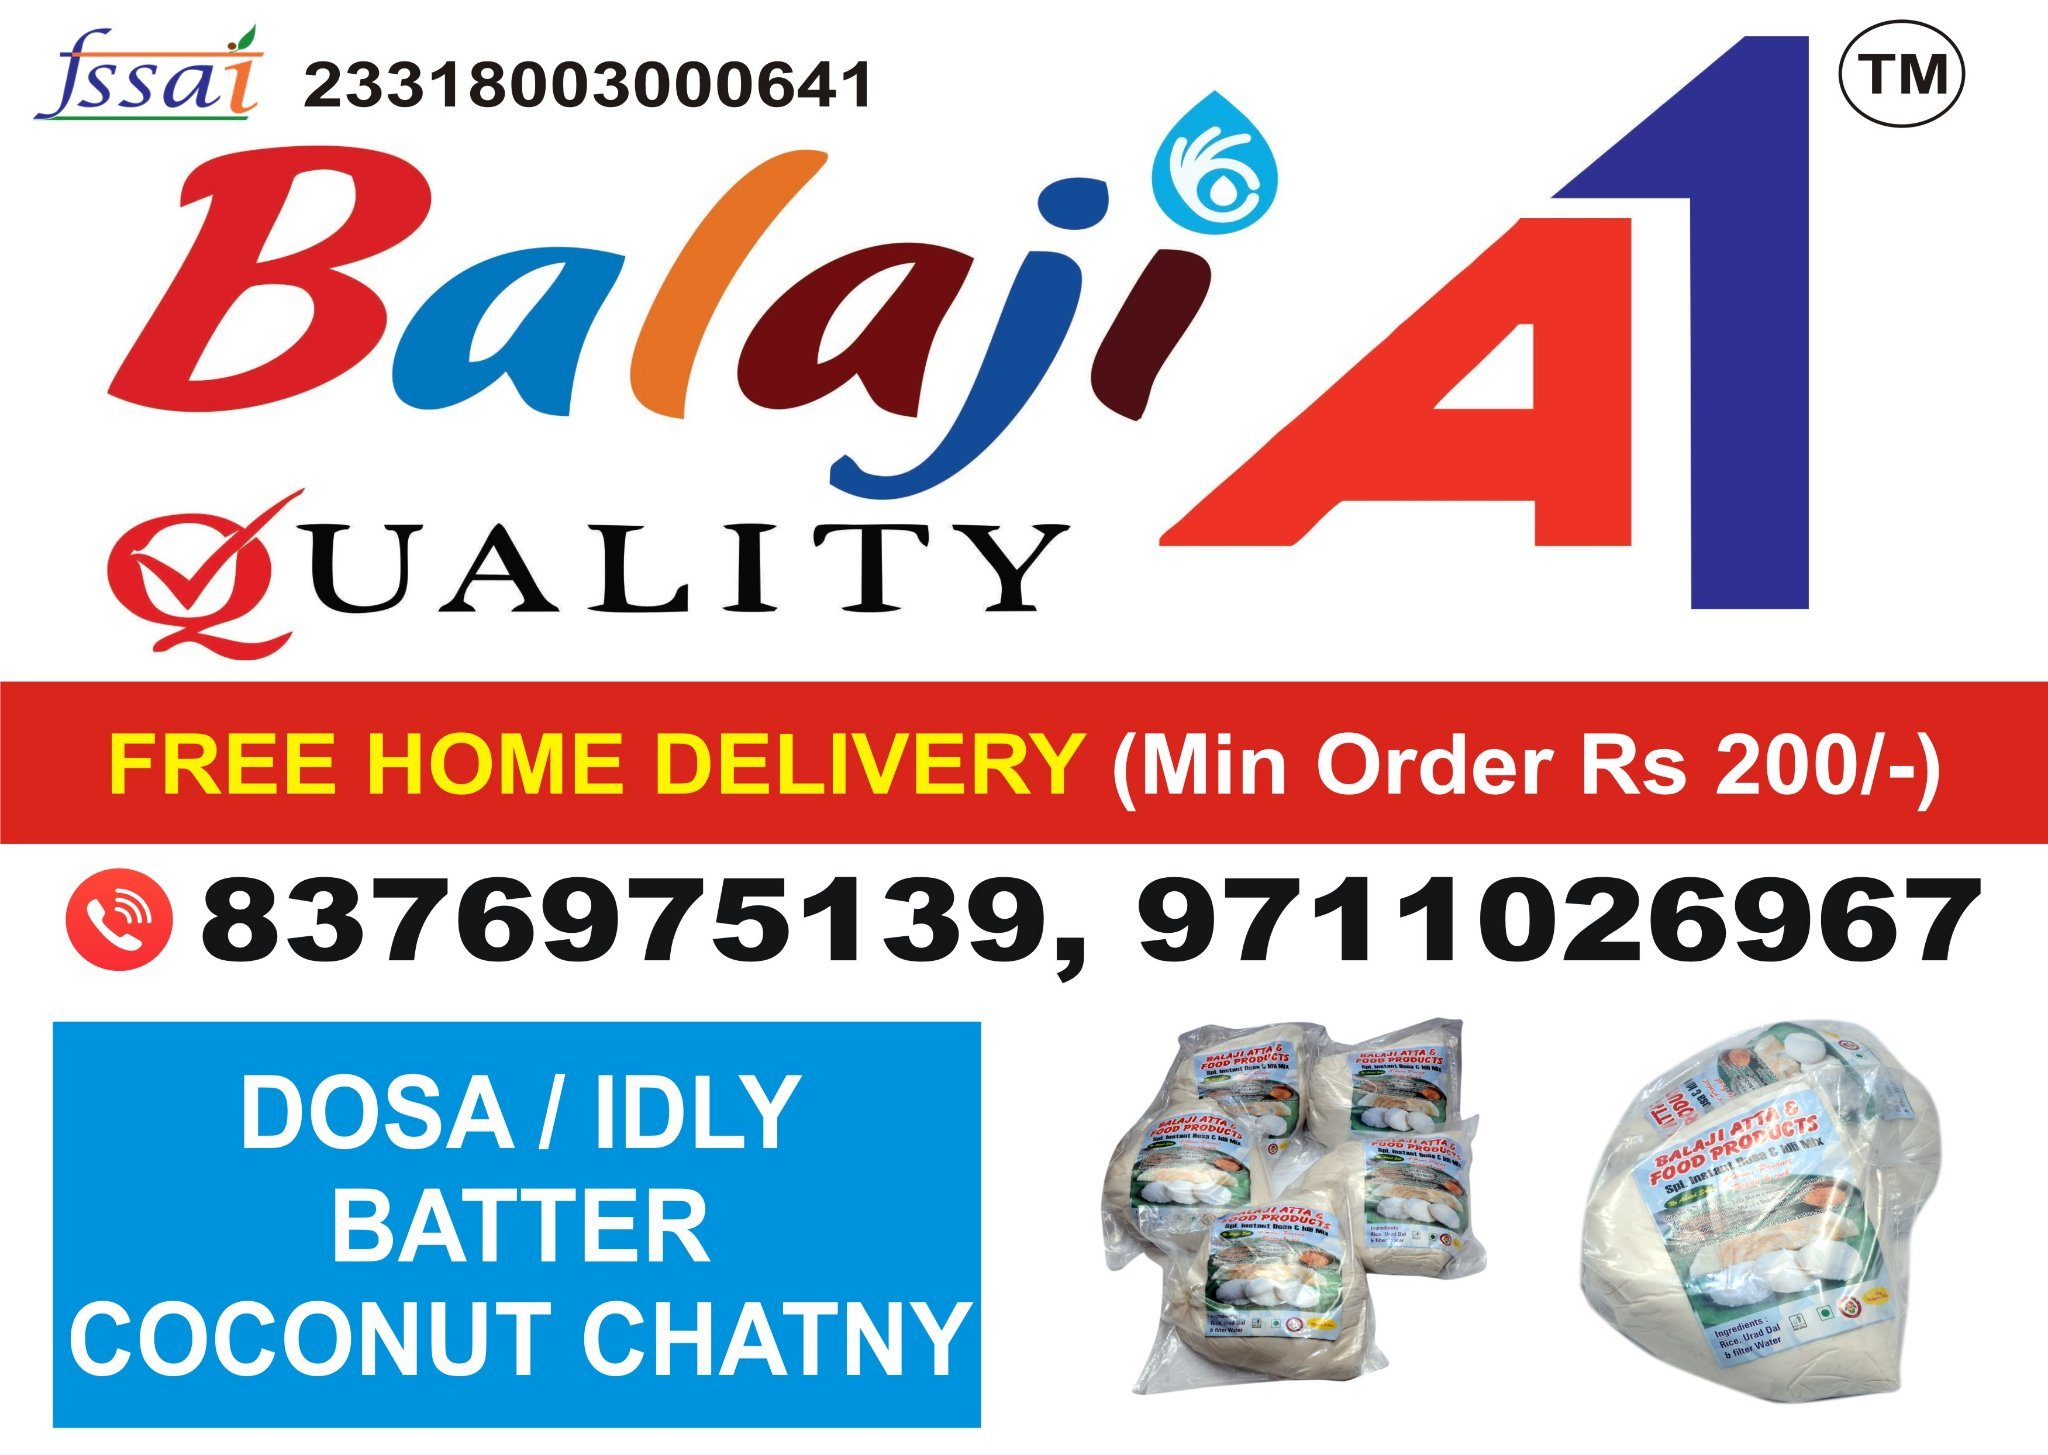 May name Anoop Kumar Gupta dosa idli batter supplier noida ncr with coconut chutney fresh Quality only supply noida ncr
Minimum oddar 300rs